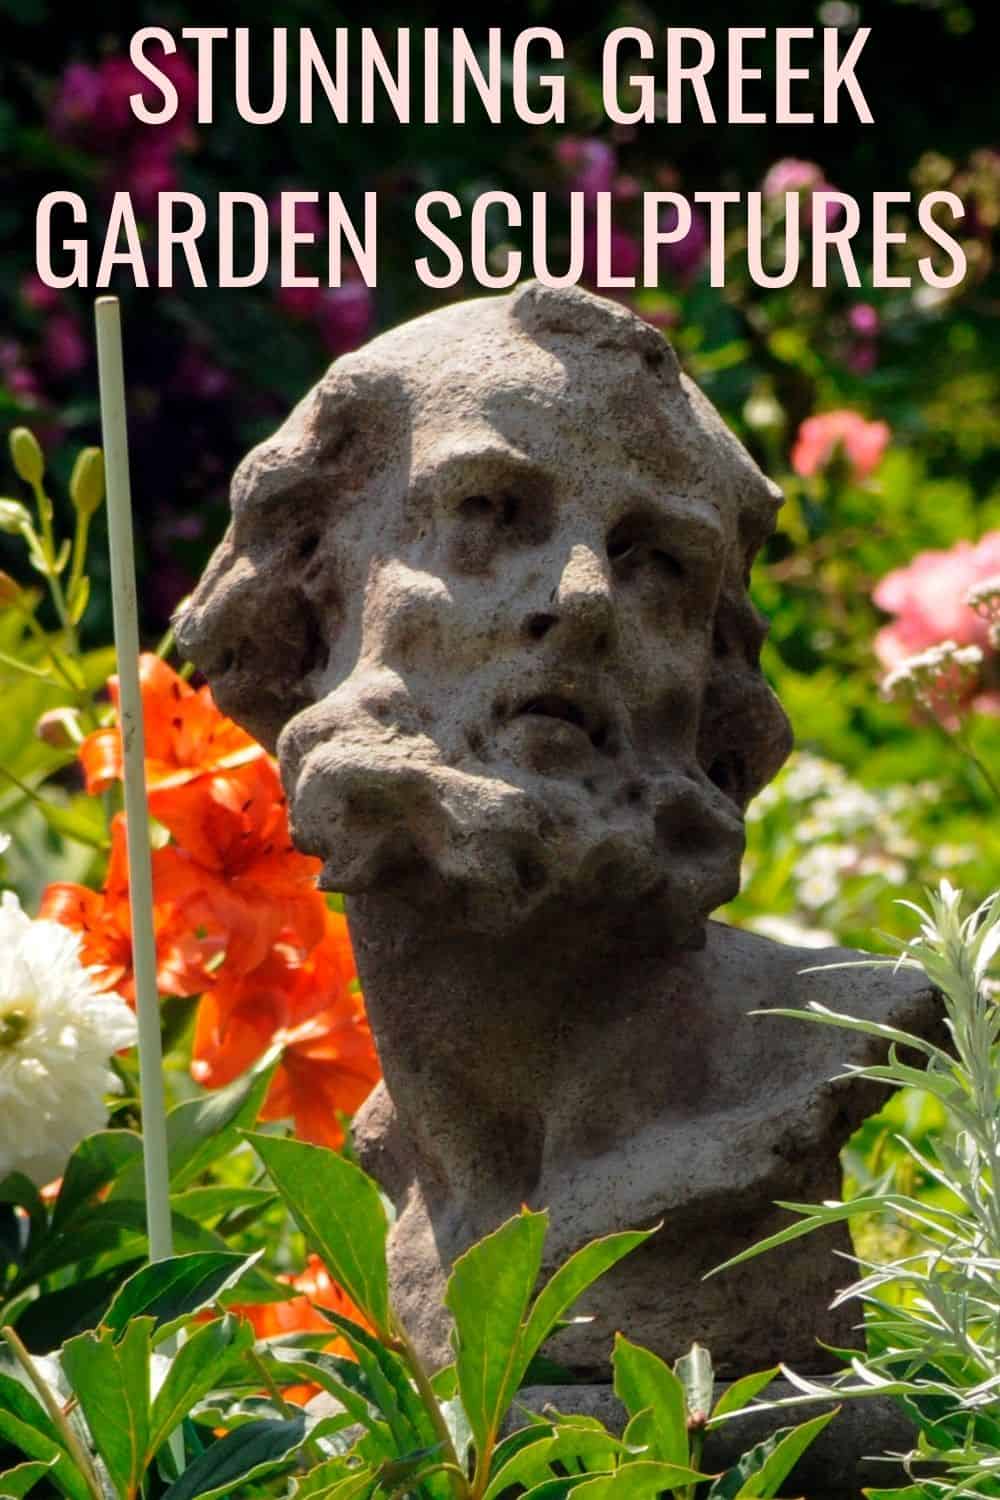 Stunning Greek garden sculptures